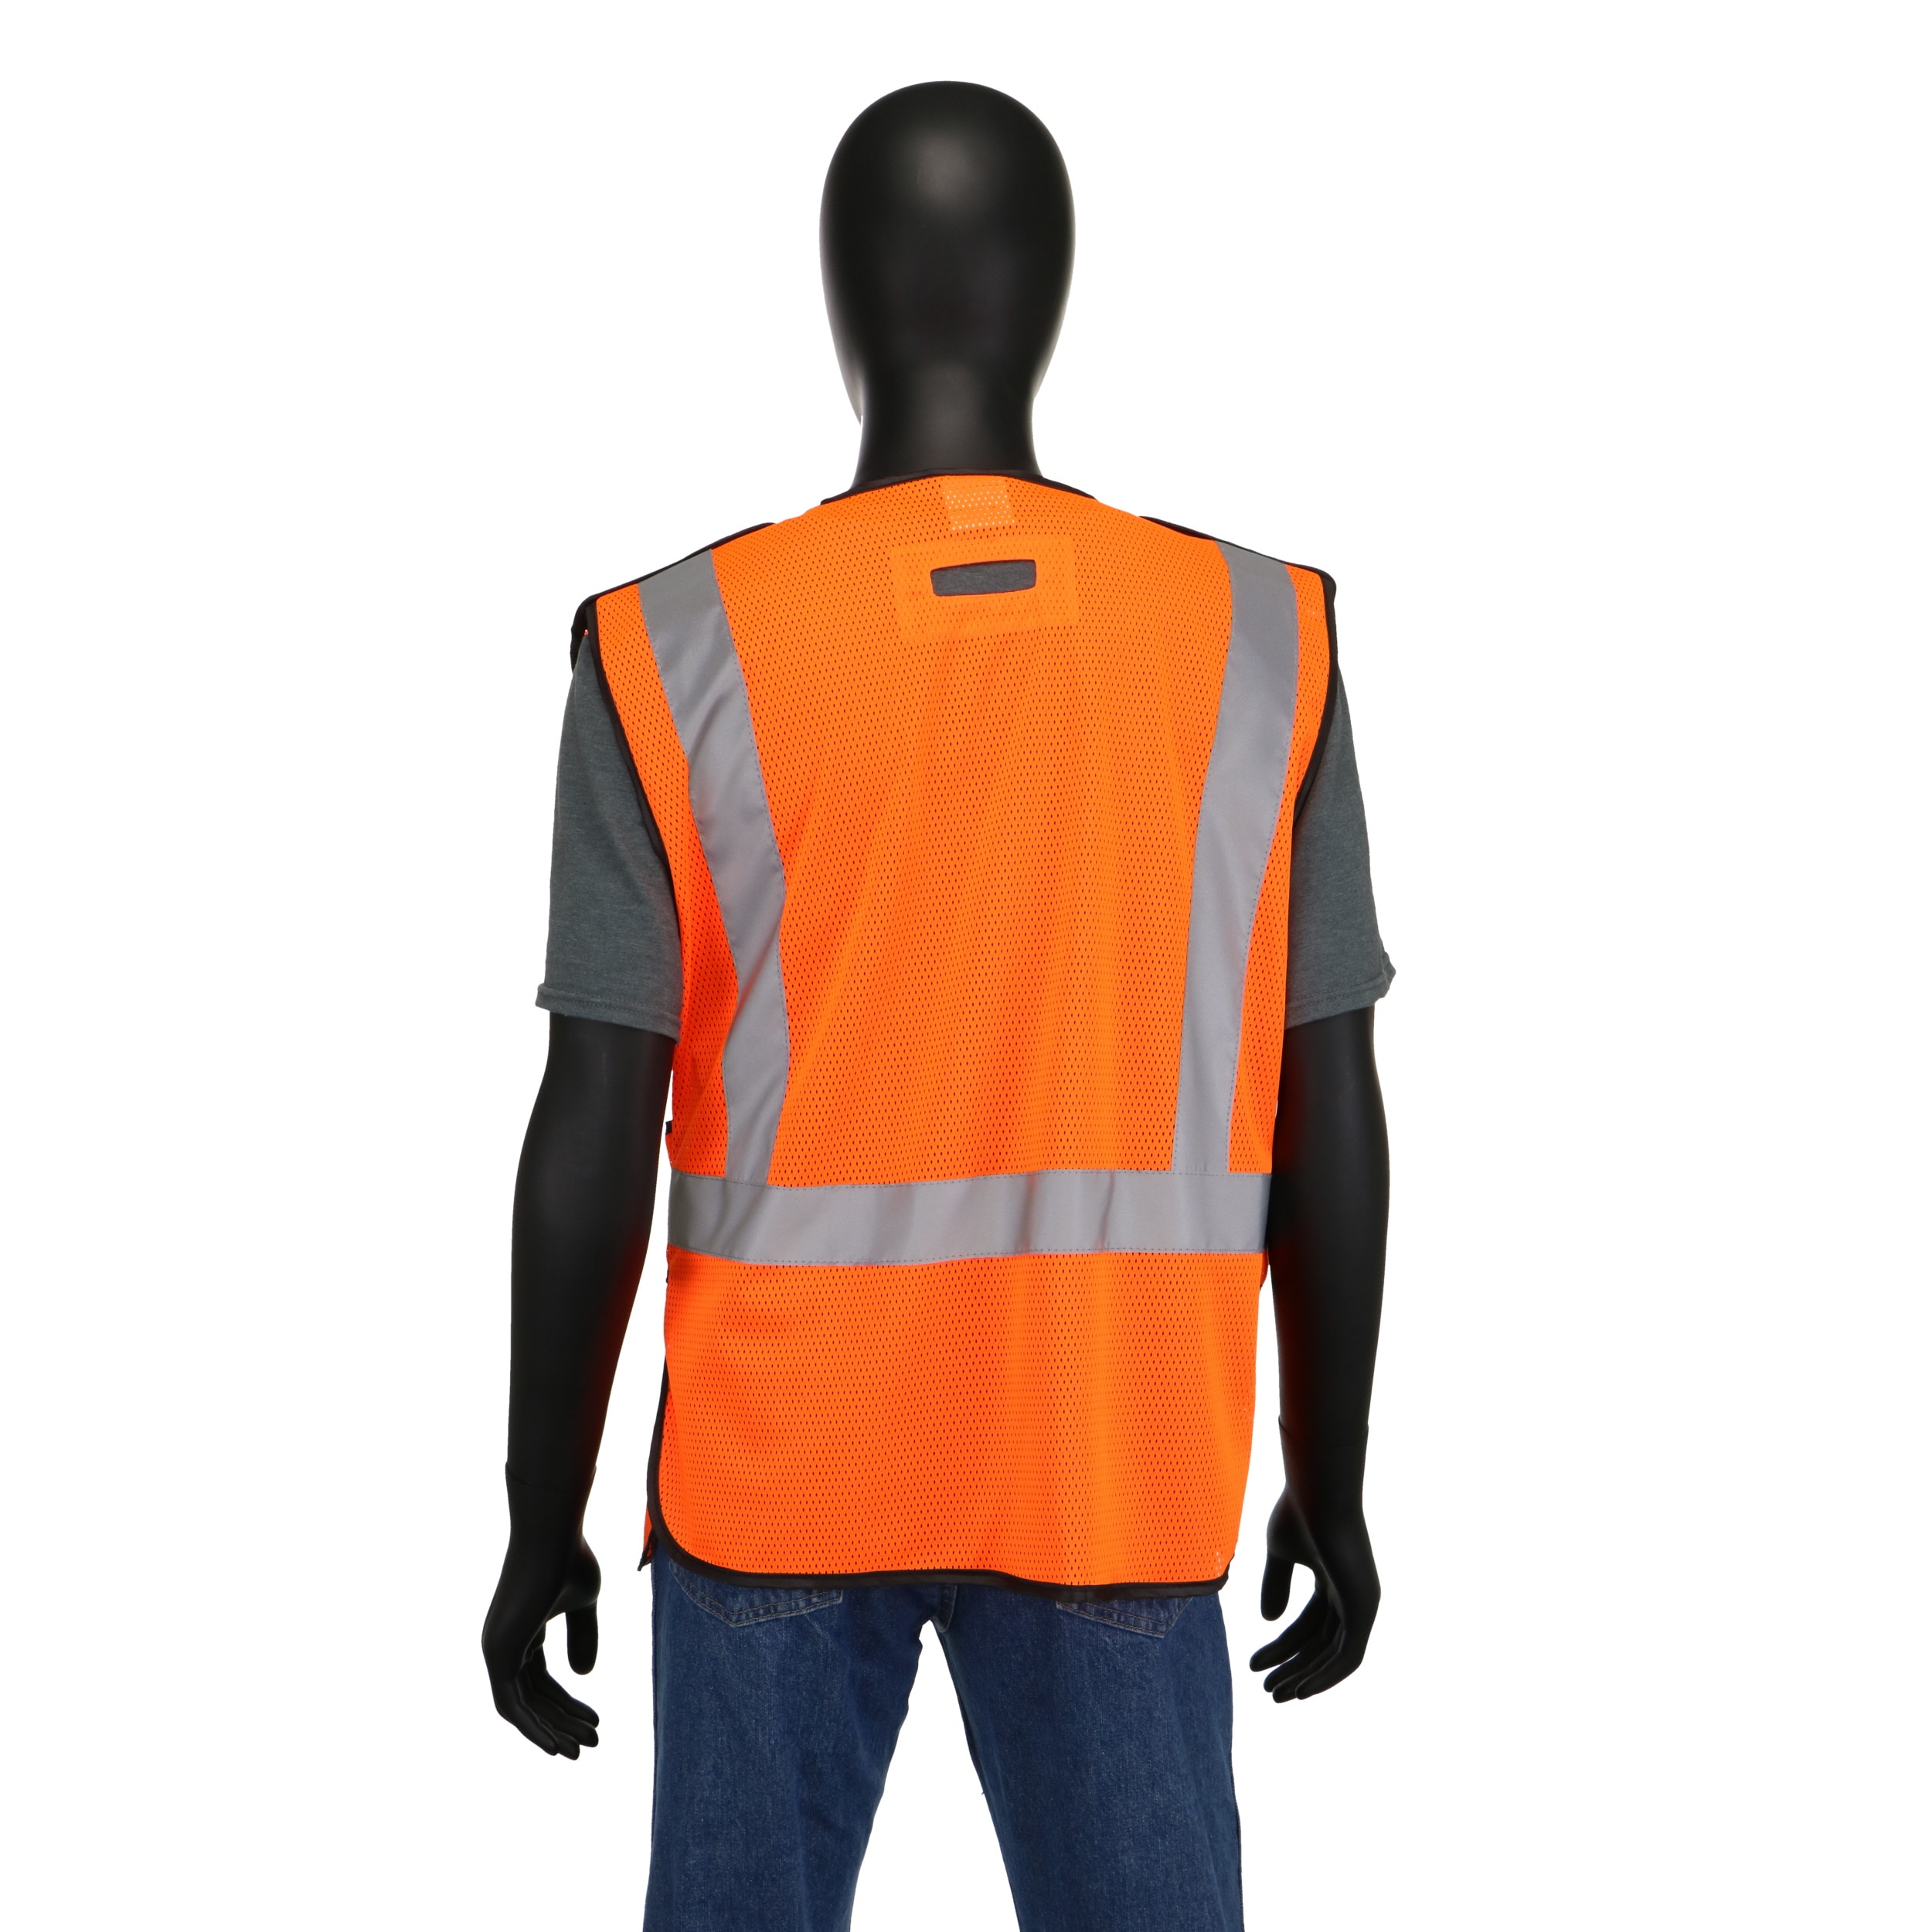 Reflective Safety Vest in Louisville, KY 40219